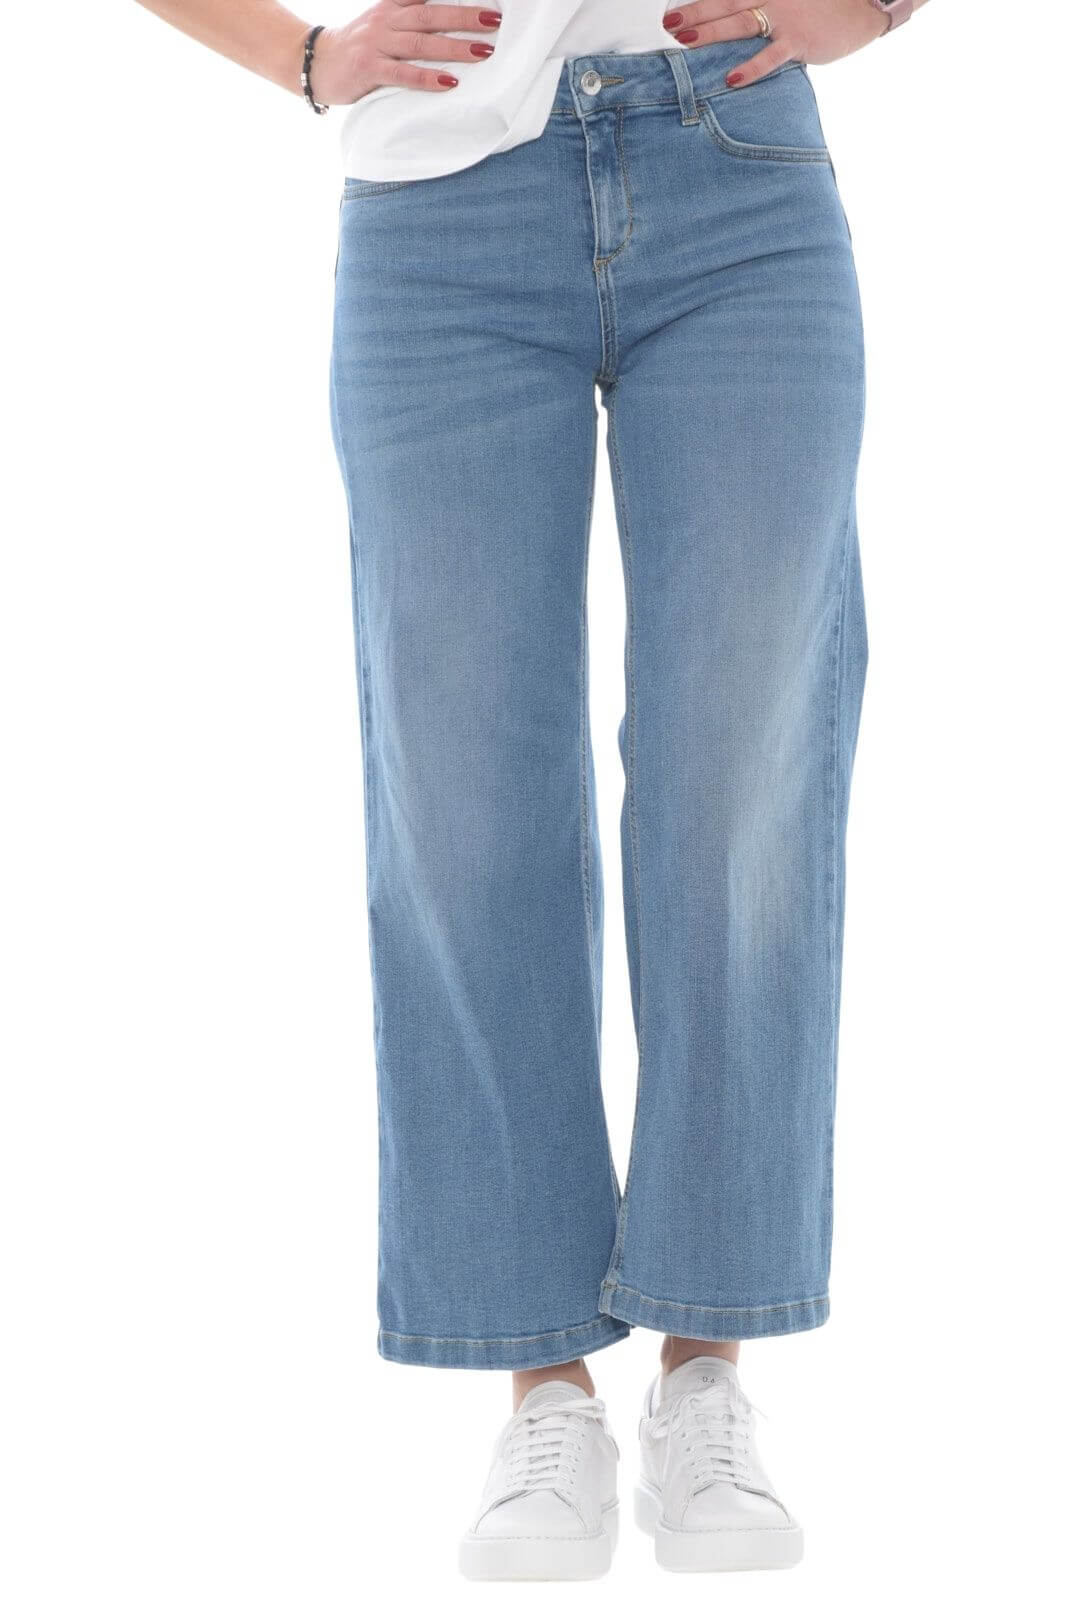 Liu Jo jeans donna flare cropped